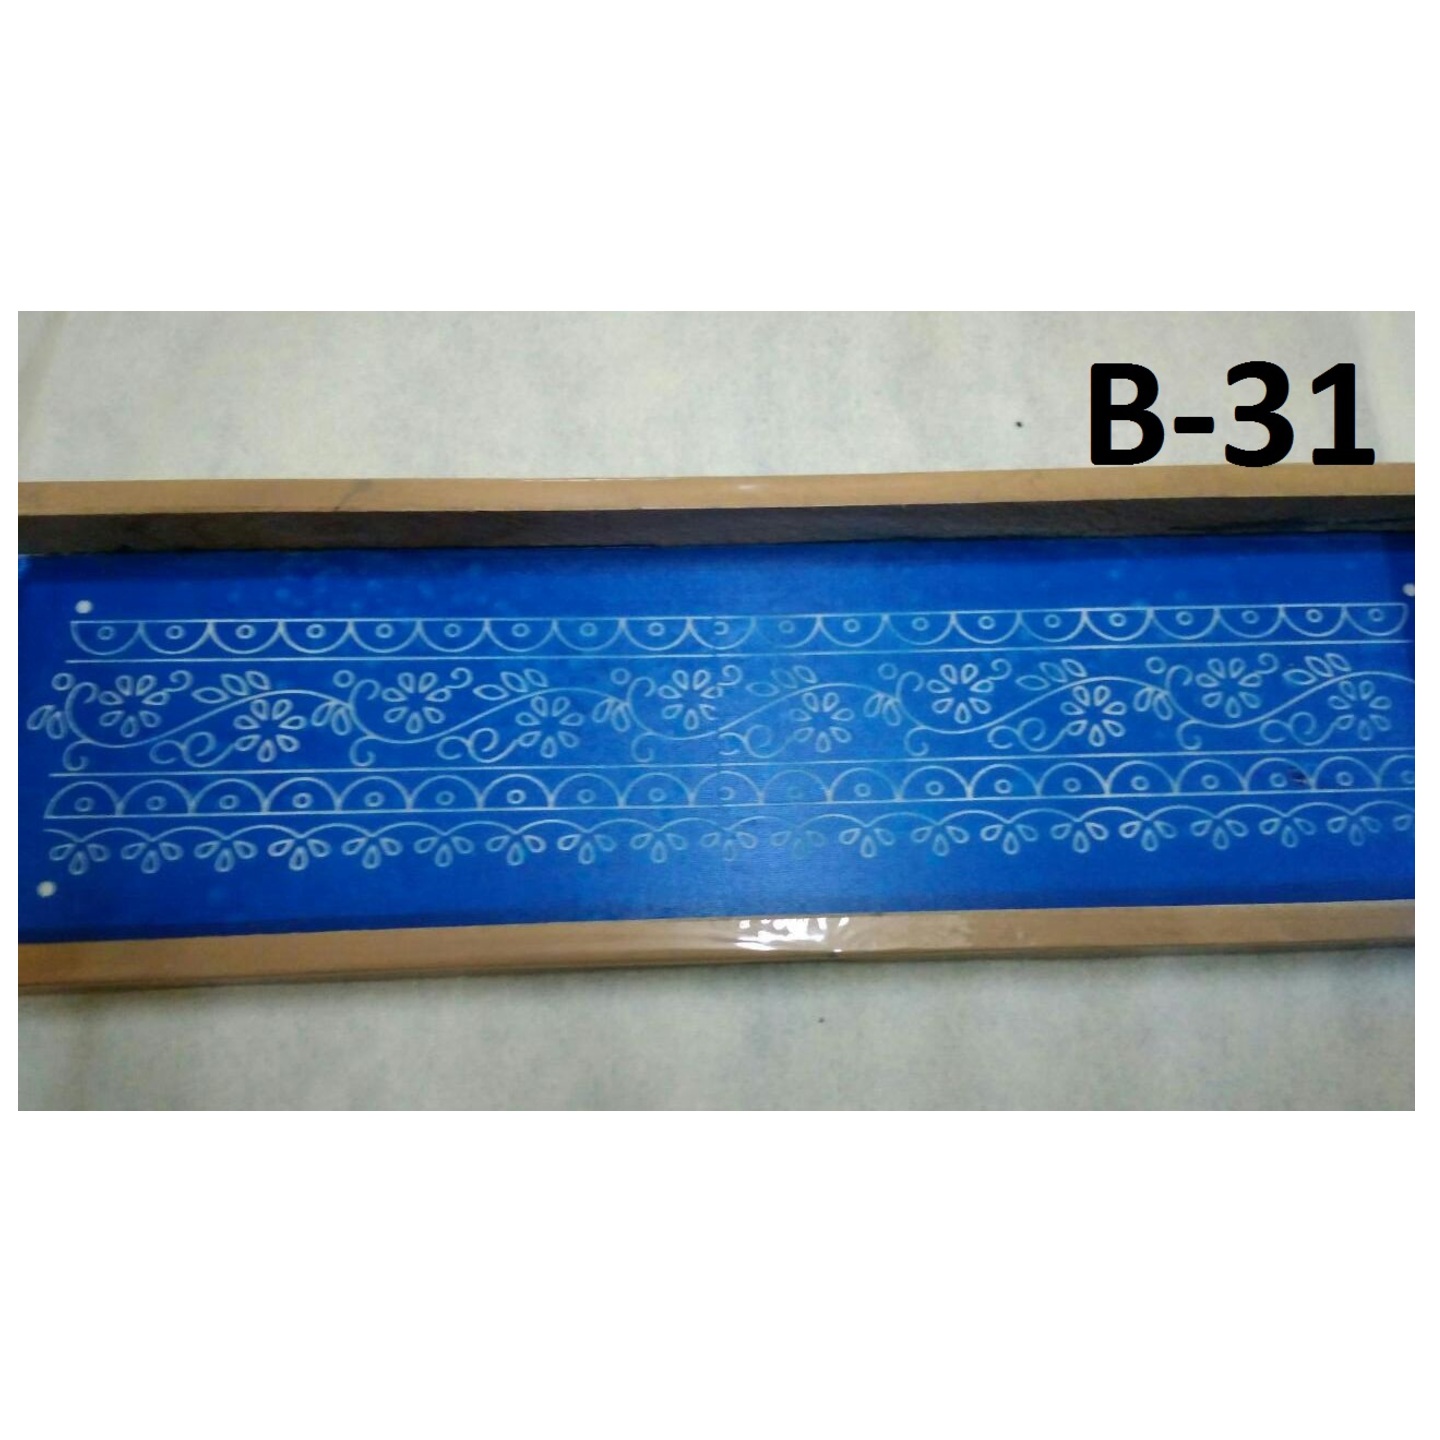 MeArtist wooden border Rangoli Stencil of 17 by 5 inch B - 31